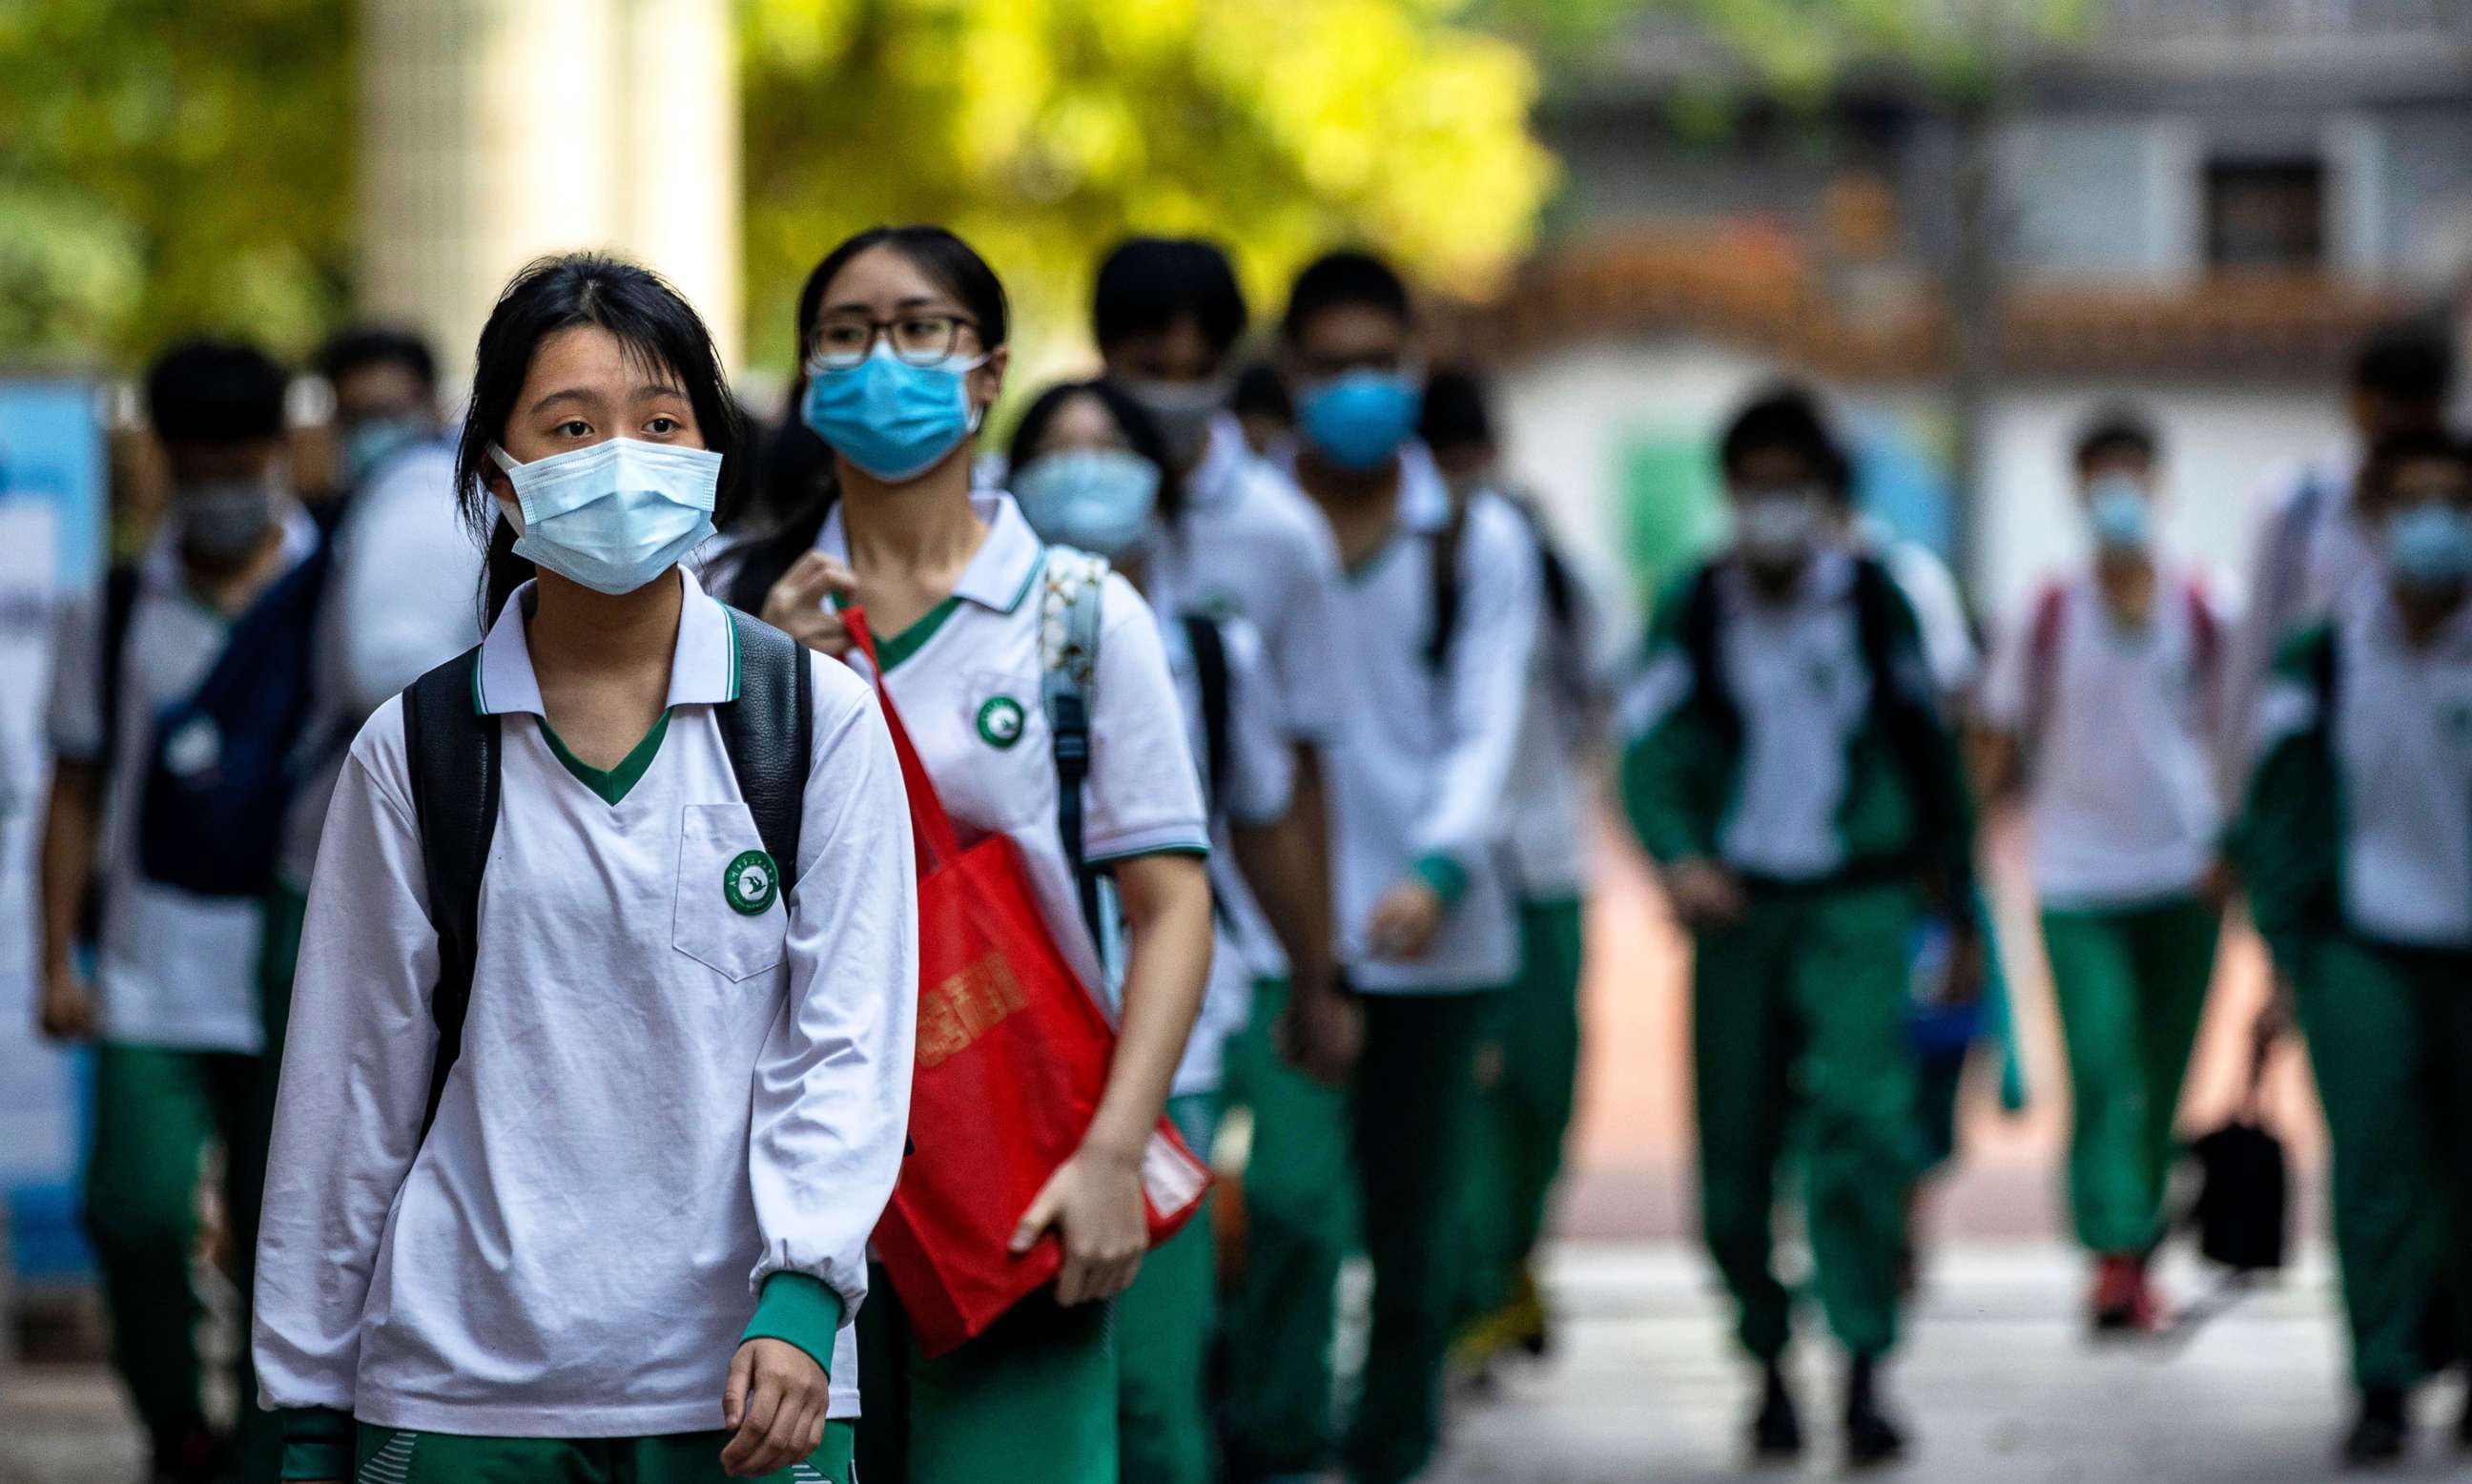 PHOTO: Students enter the Nanwu school in Guangzhou, China, April 17, 2020, amid the ongoing coronavirus COVID-19 pandemic.